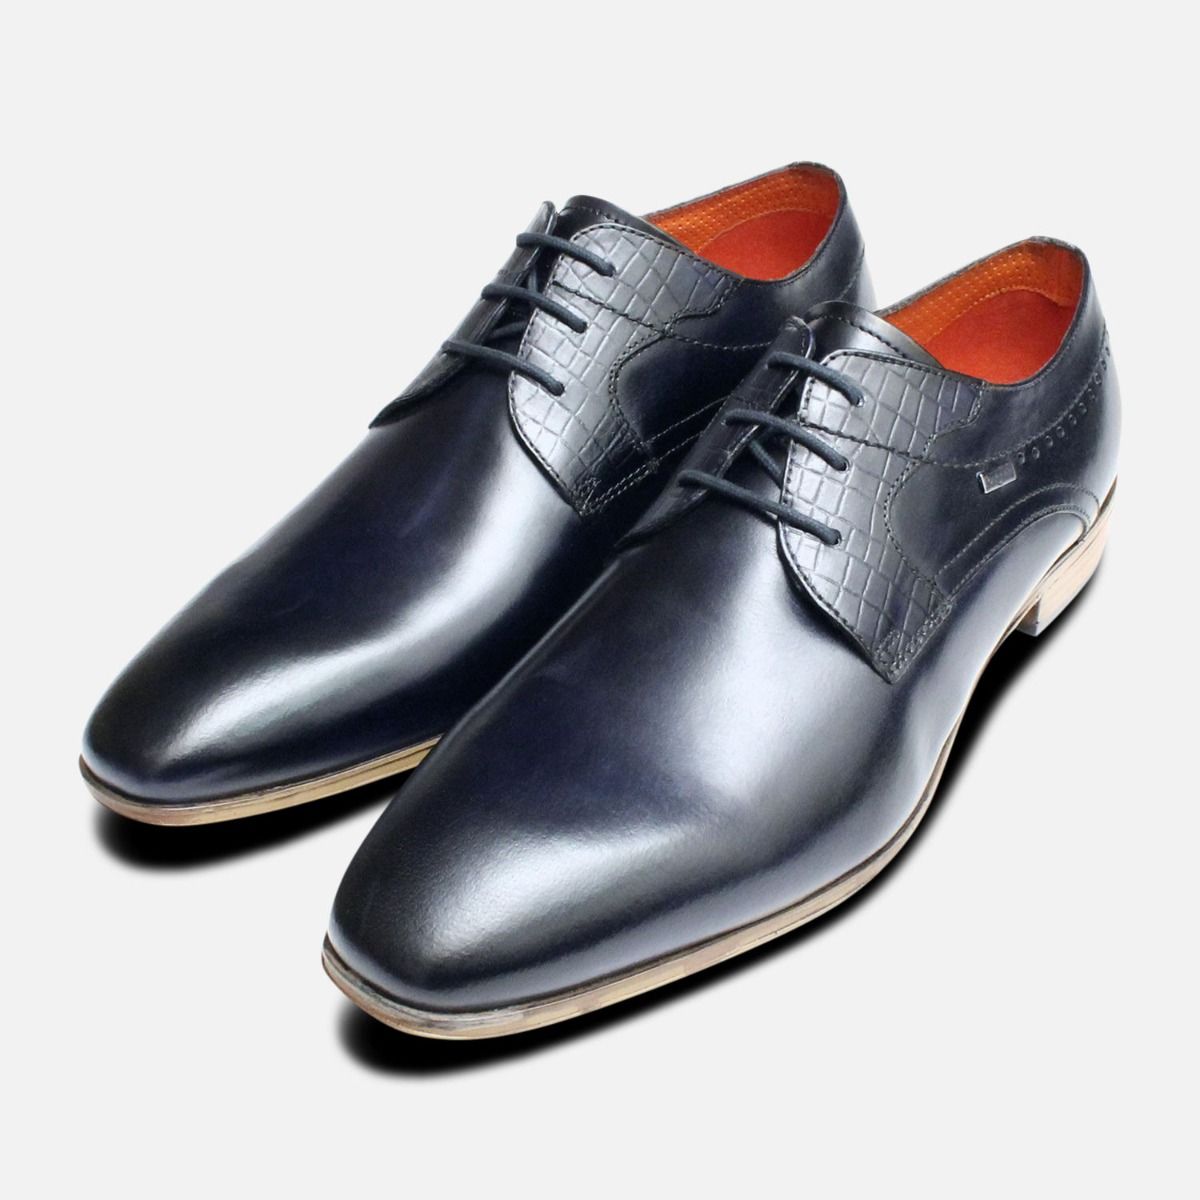 mens shoes blue leather